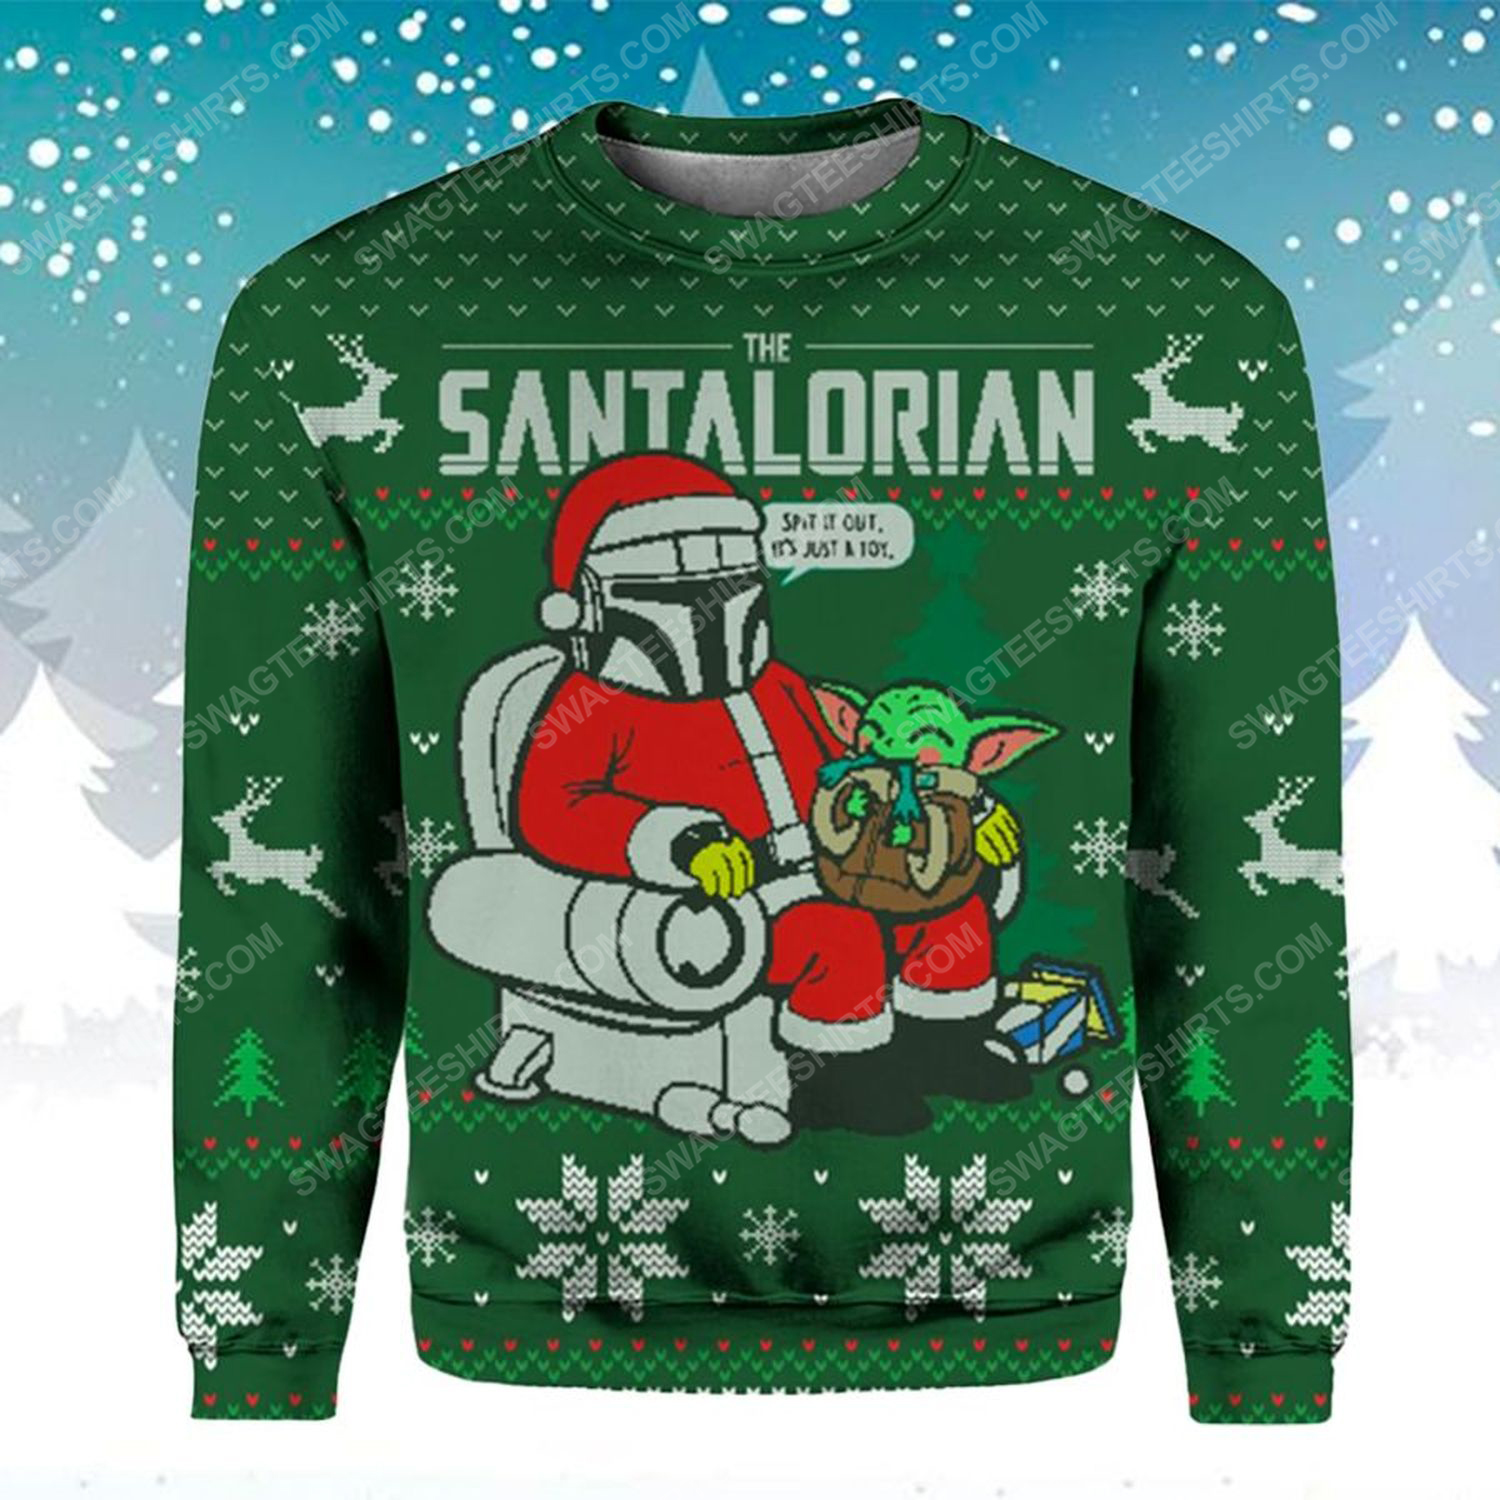 Star wars the santalorian ugly christmas sweater - Copy (3)